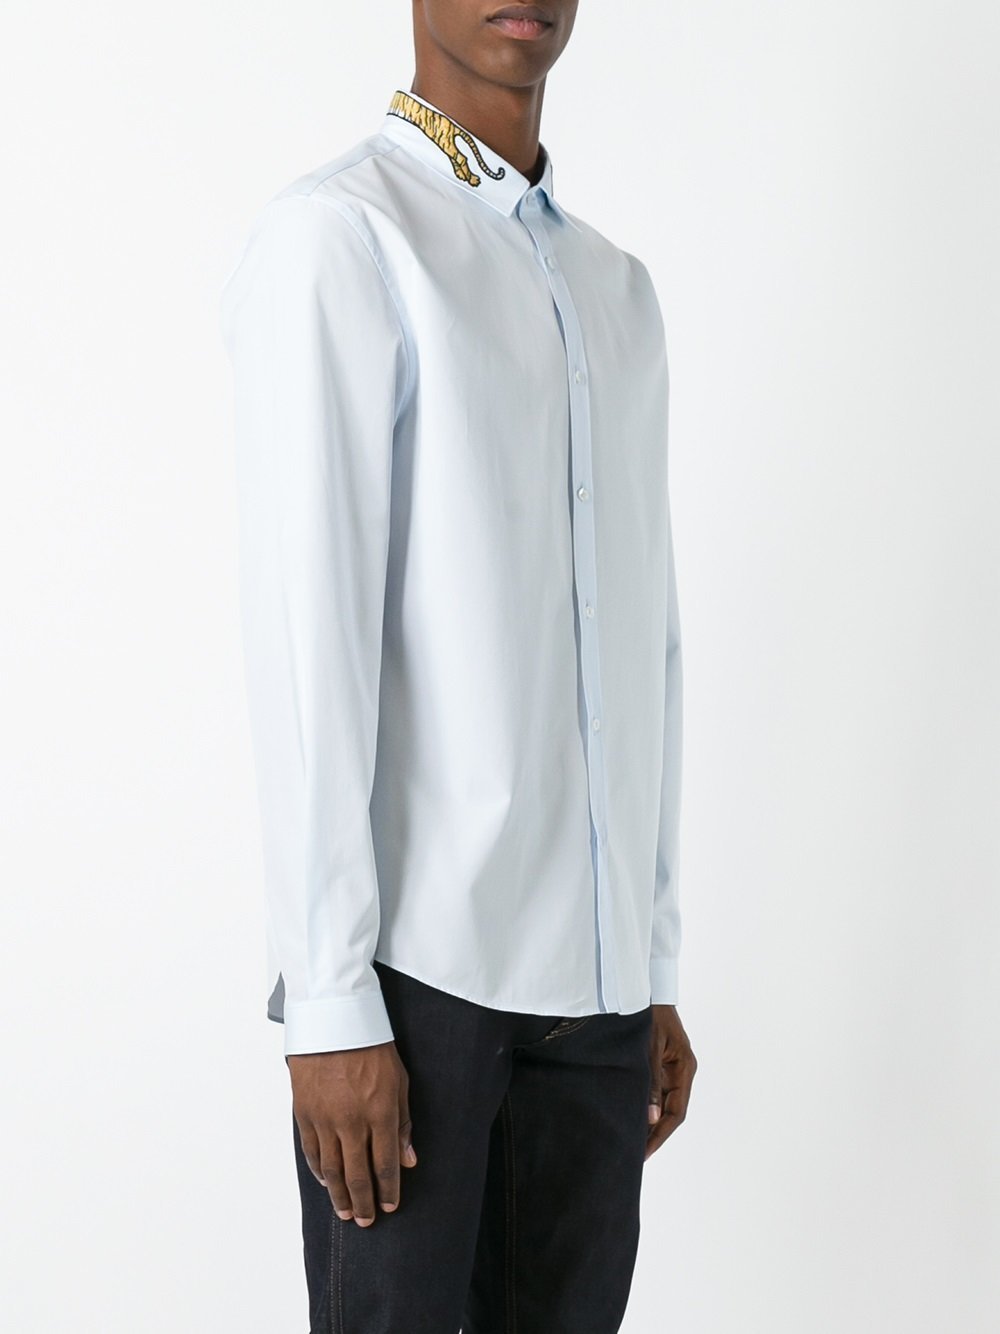 Gucci Tiger Embroidered Collar Shirt, $743 | farfetch.com | Lookastic